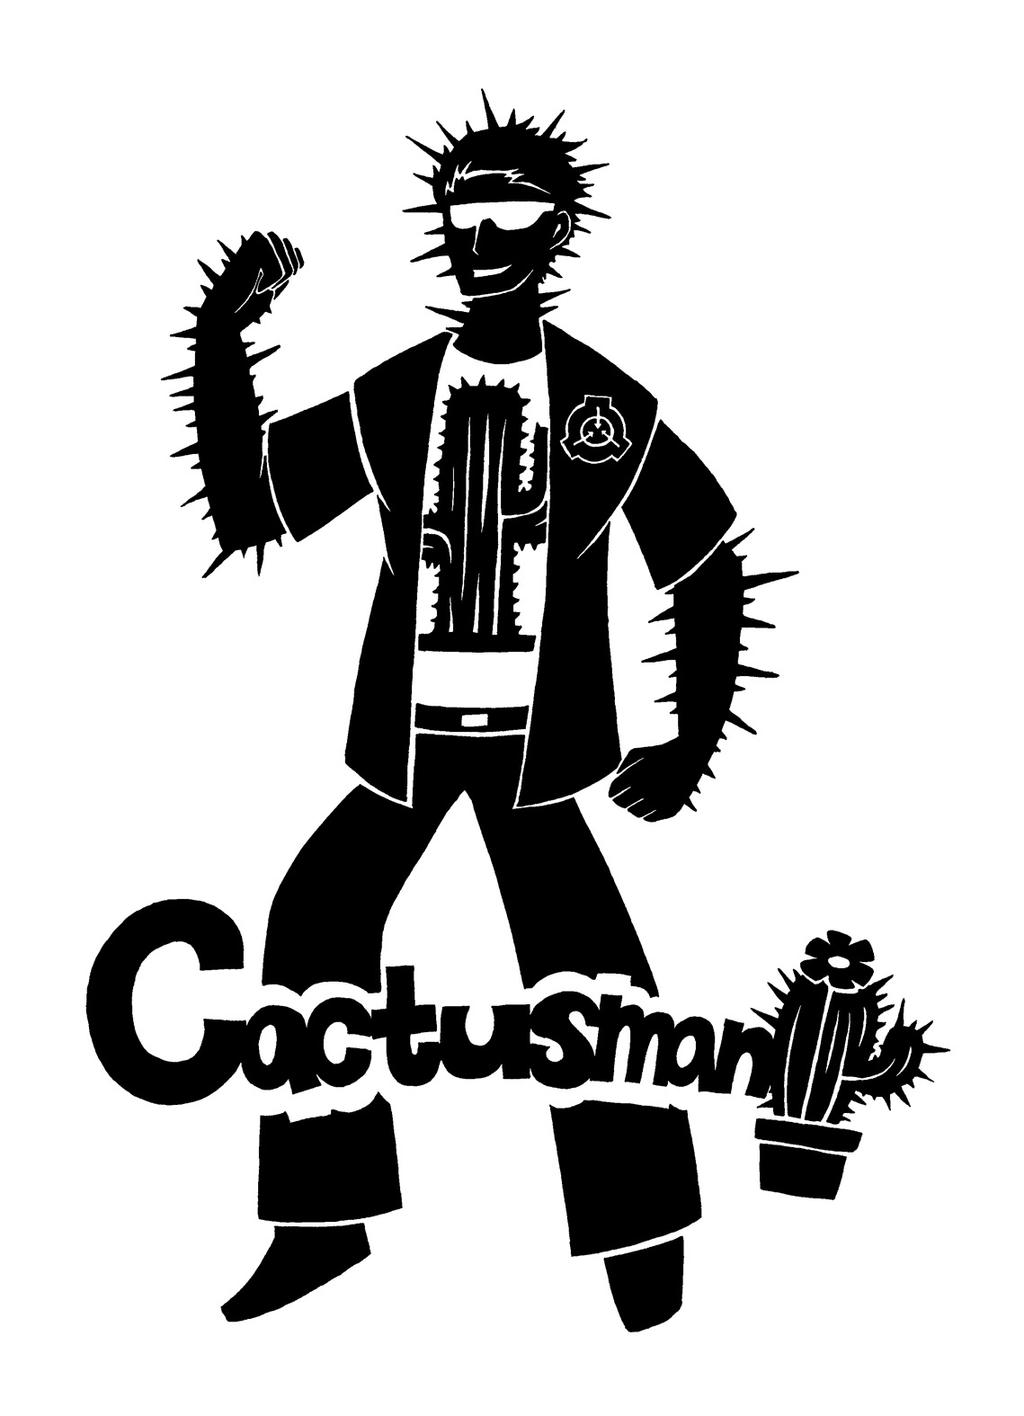 SCP-2800 - Cactusman